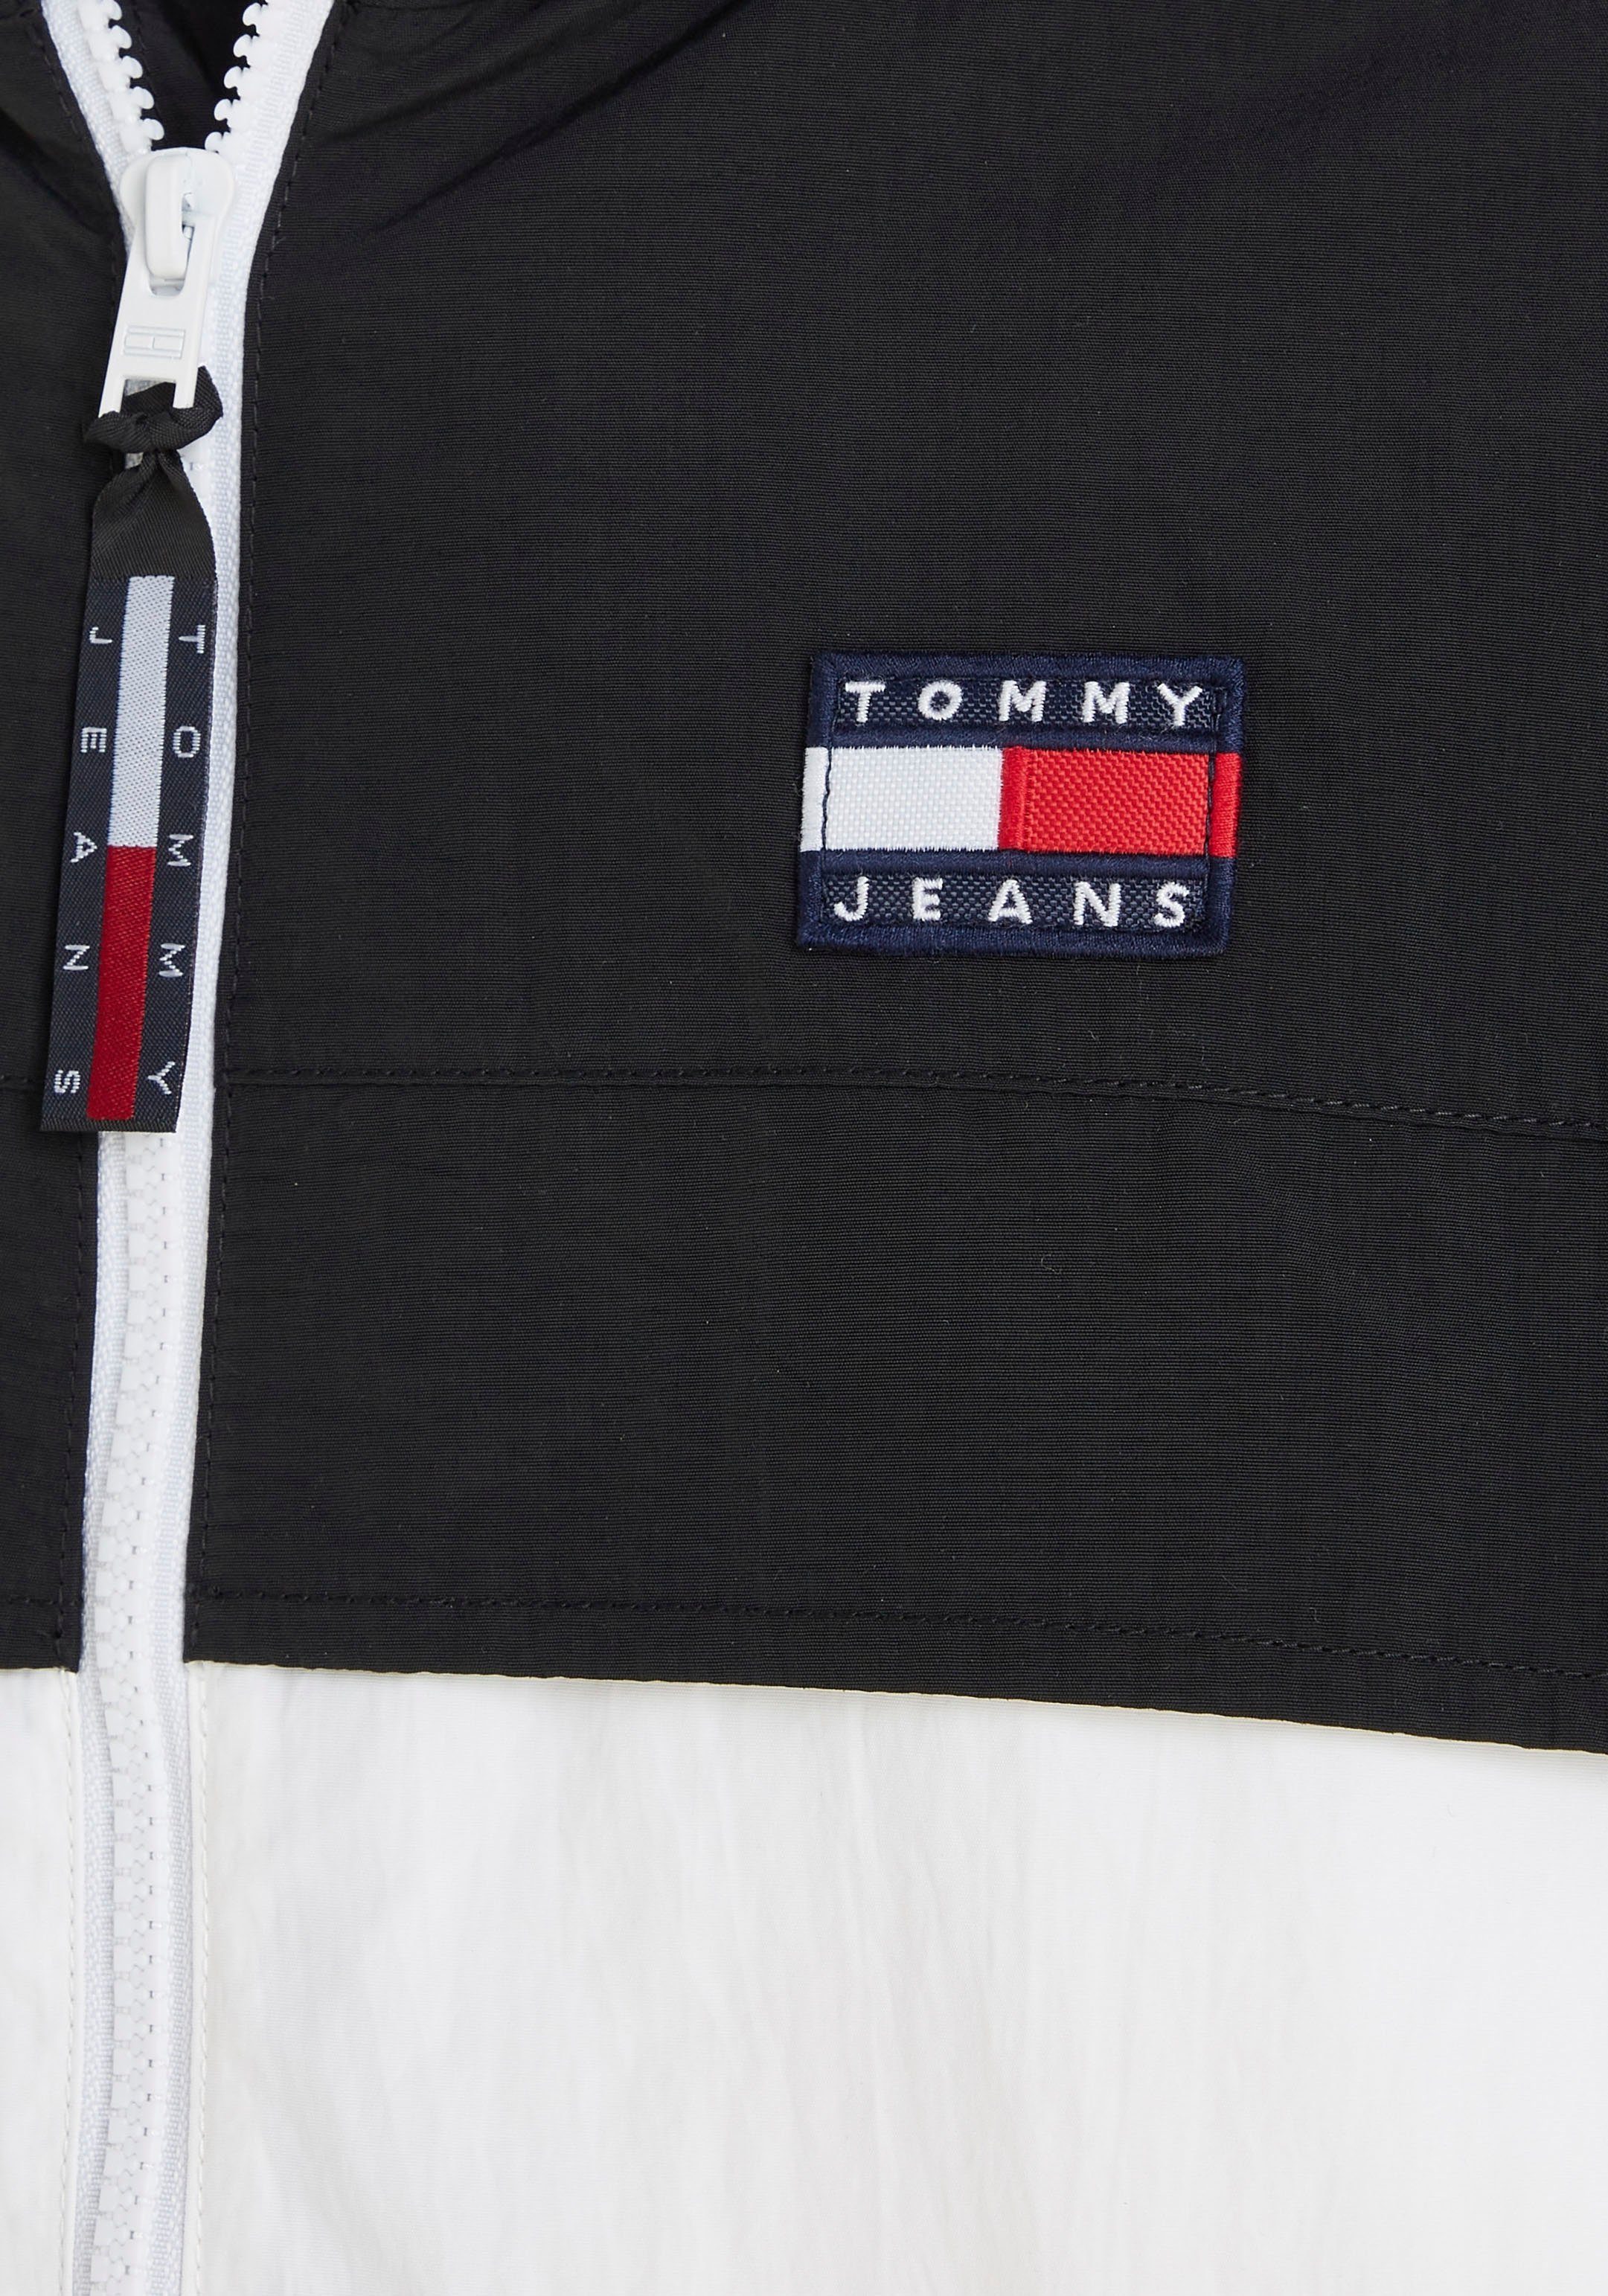 Tommy Jeans Windbreaker TJM CLBK colorblocking WINDBREAKER CHICAGO Design Black/DeepCrimson/White im